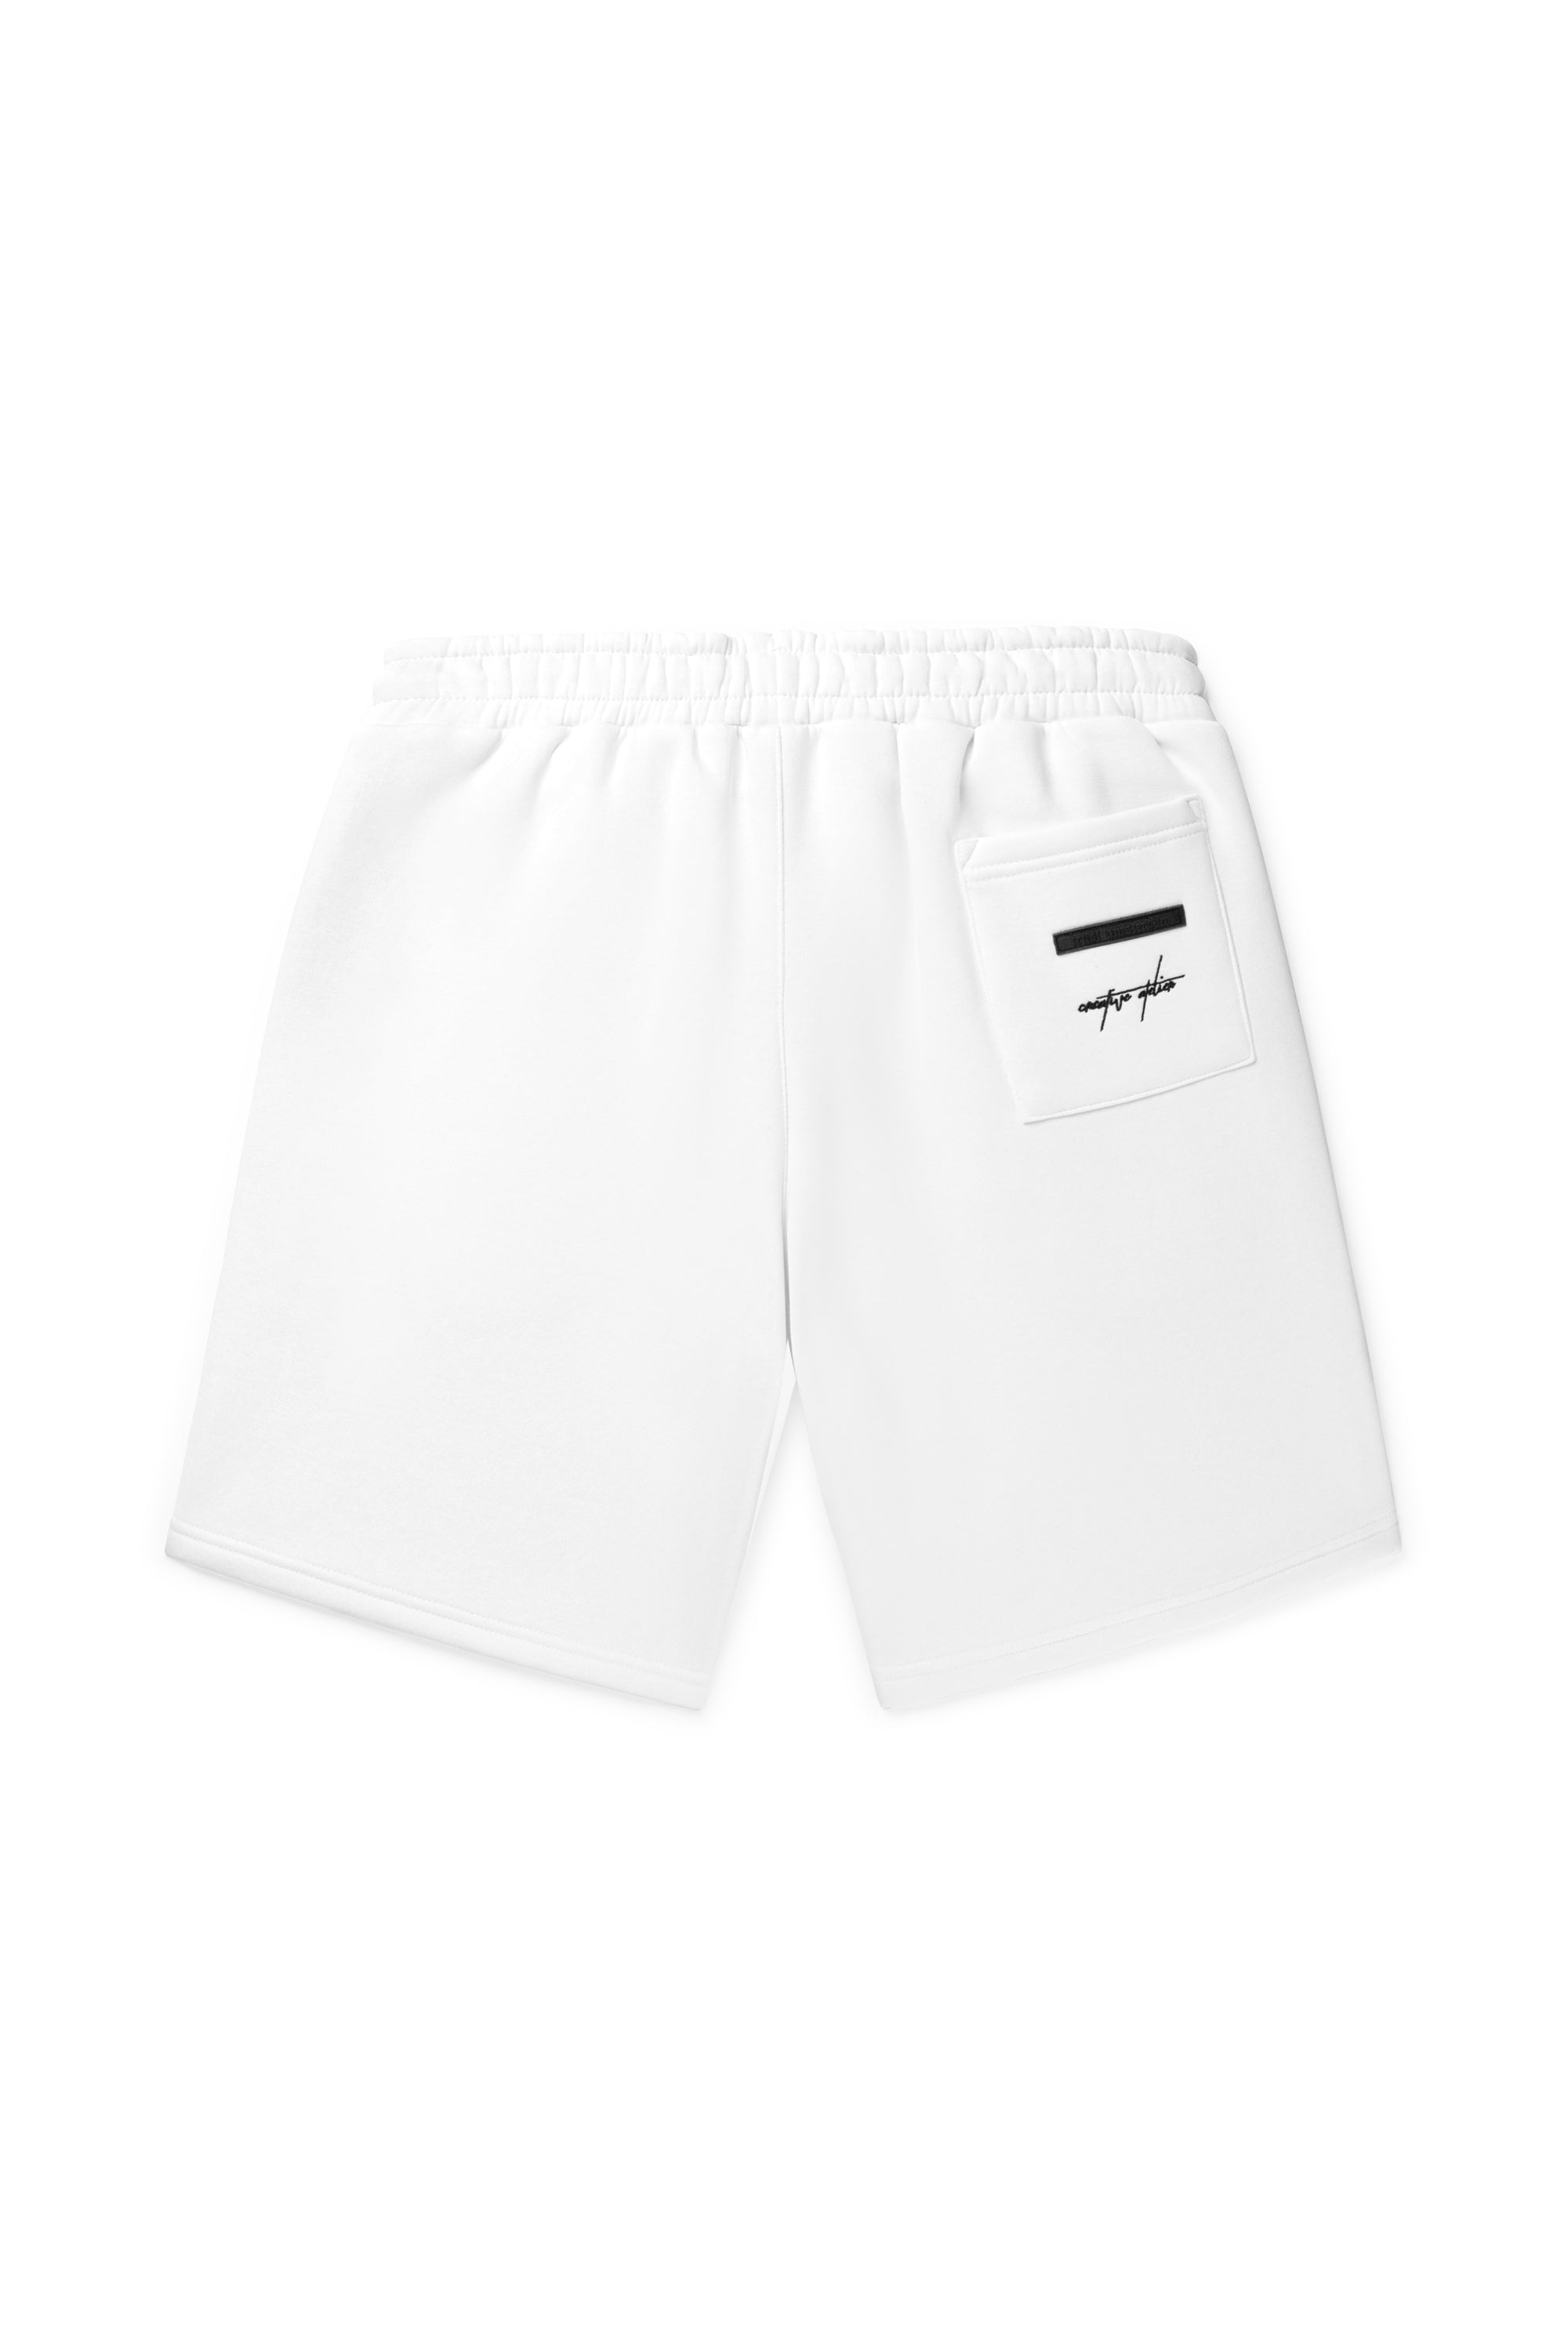 Amsterdam x TRUST Shorts - White